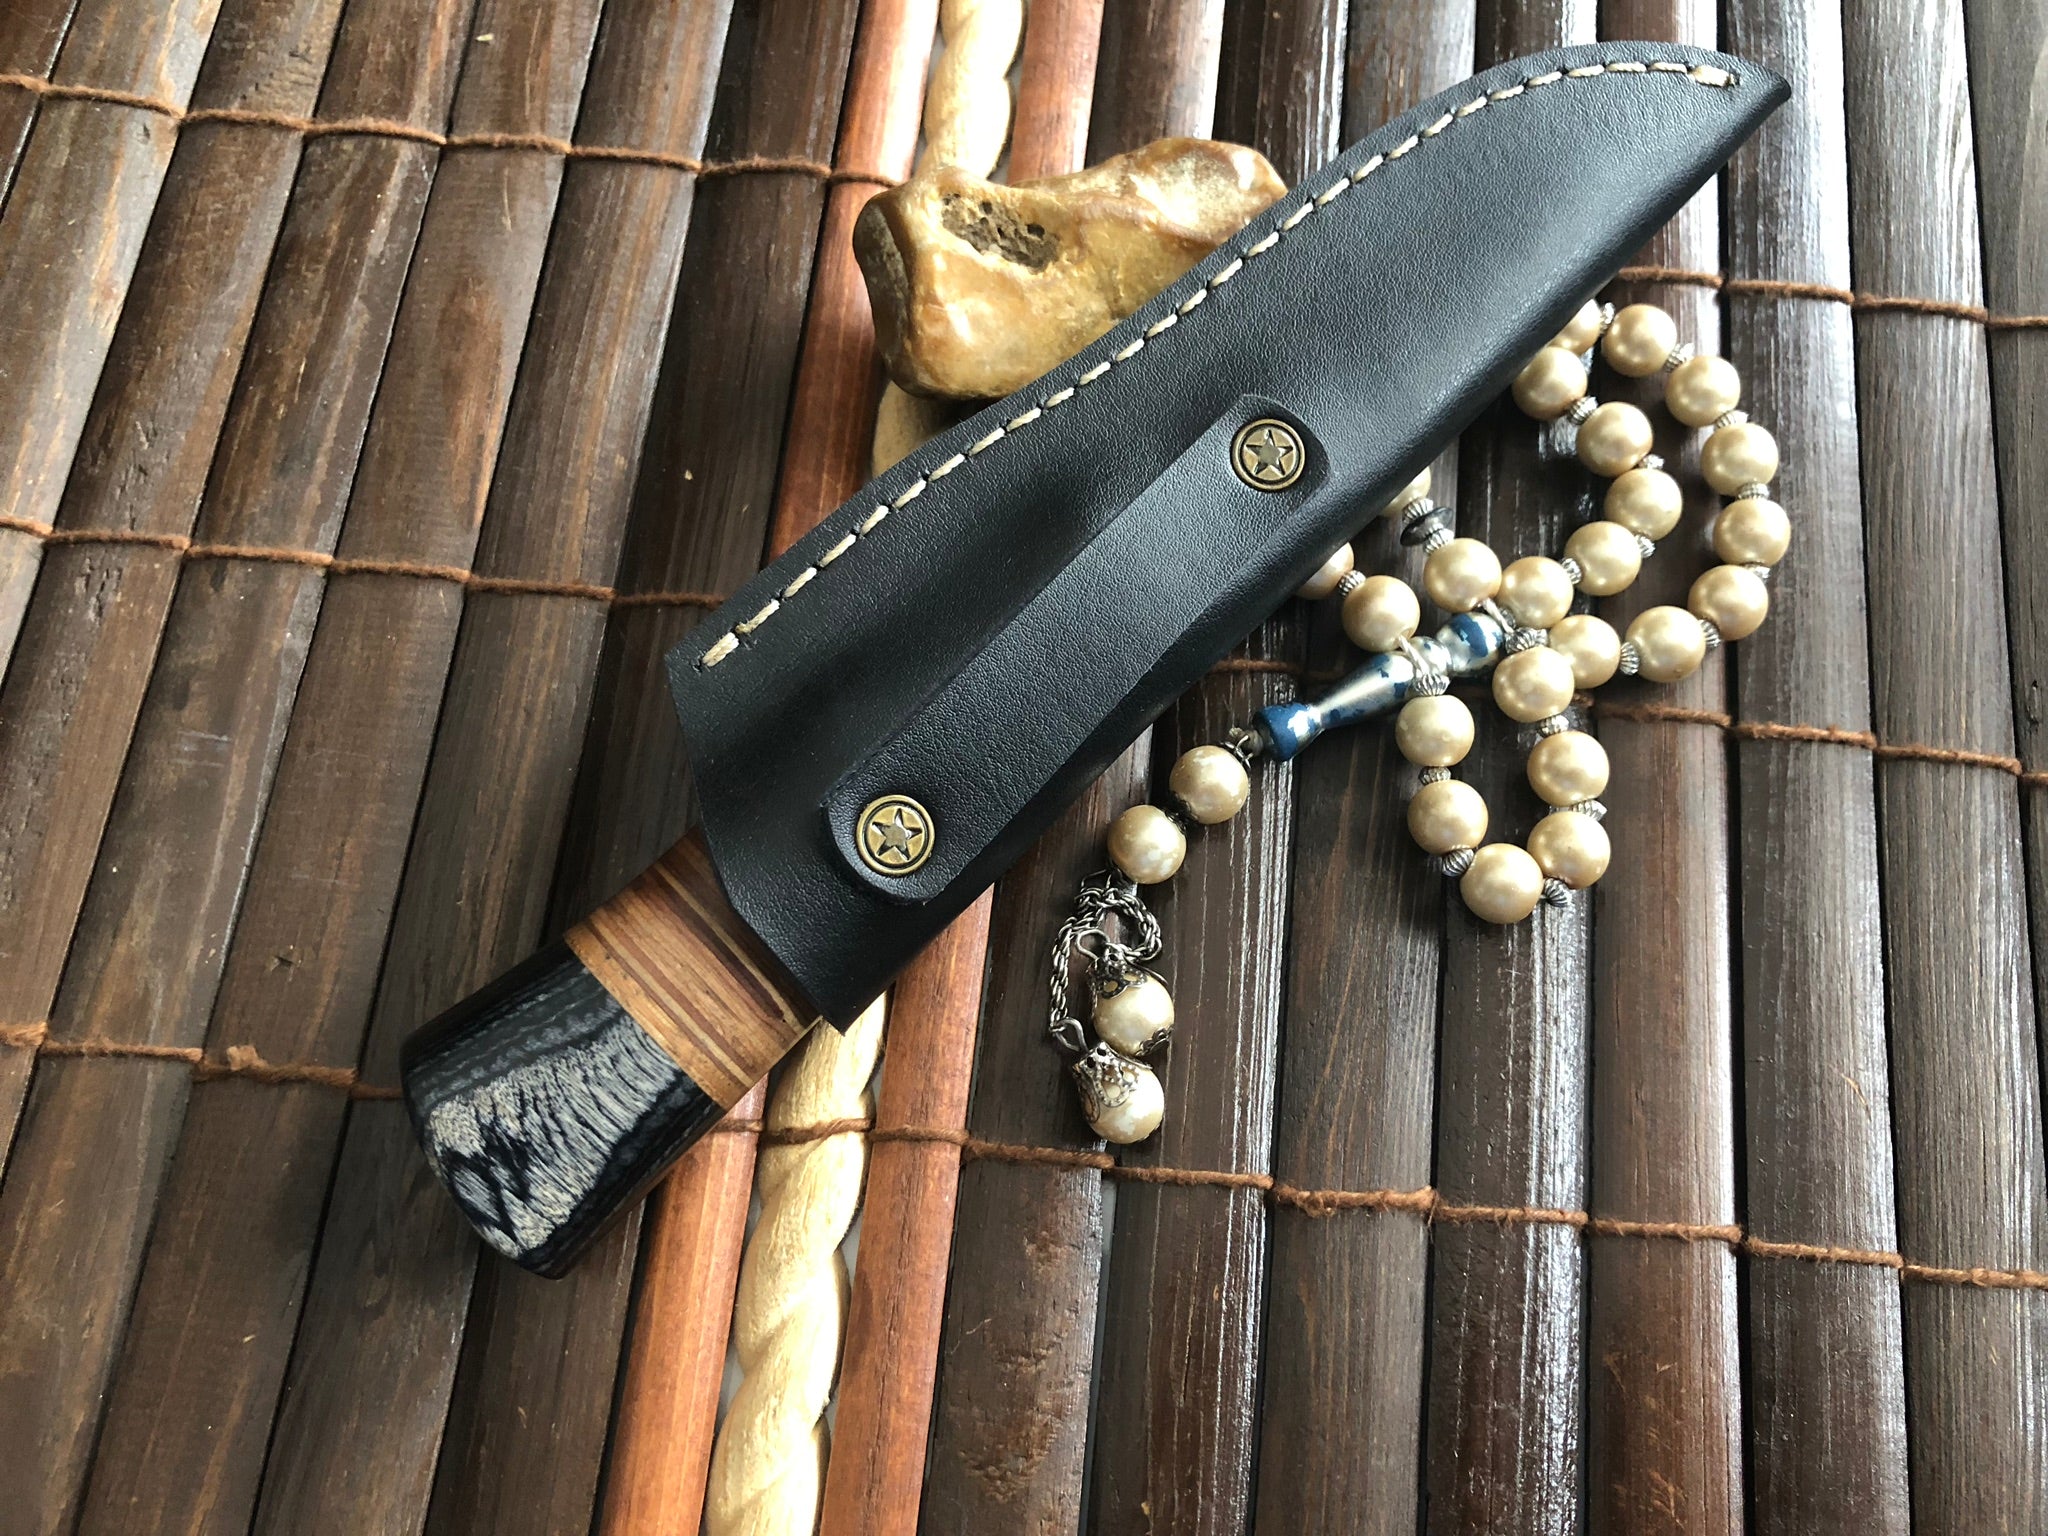 Handmade Knife Damascus Steel Hunting Knife with Sheath SK1900 Fix Blade Knife